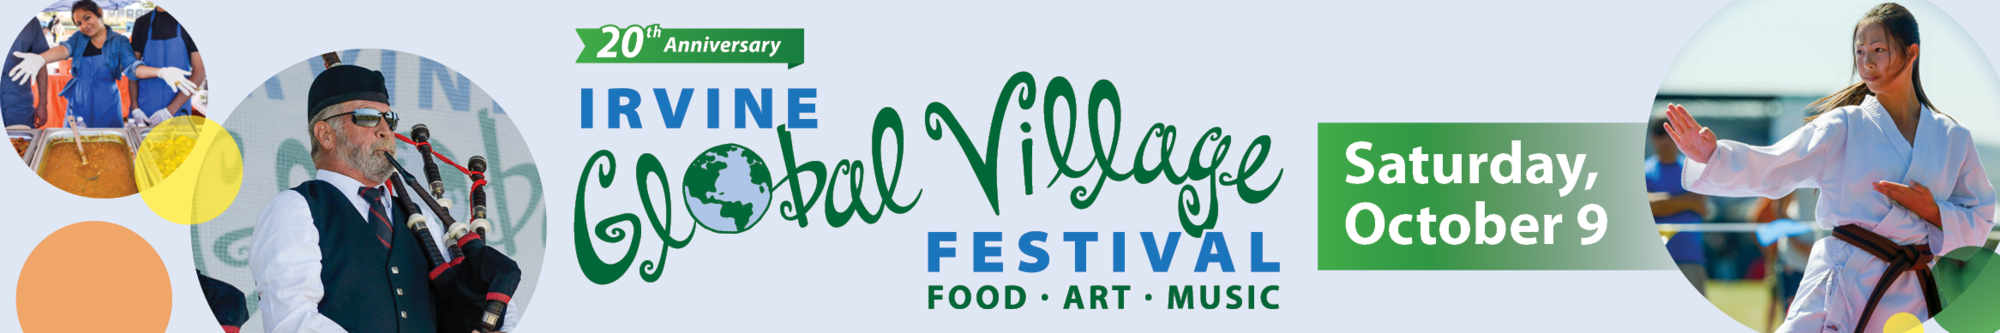 Irvine Global Village Festival